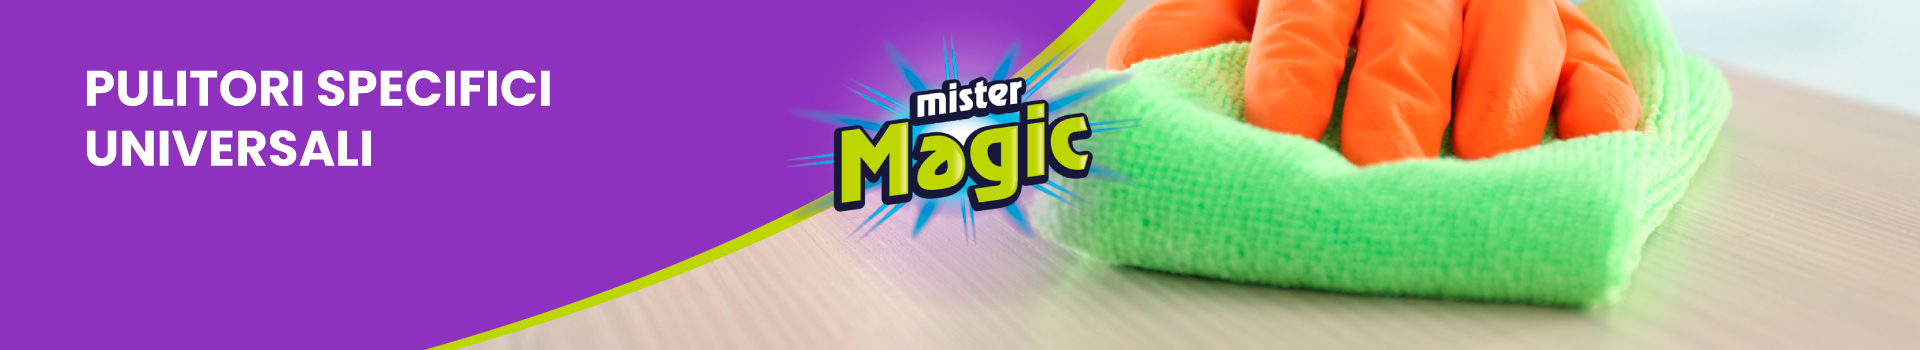 mister magic